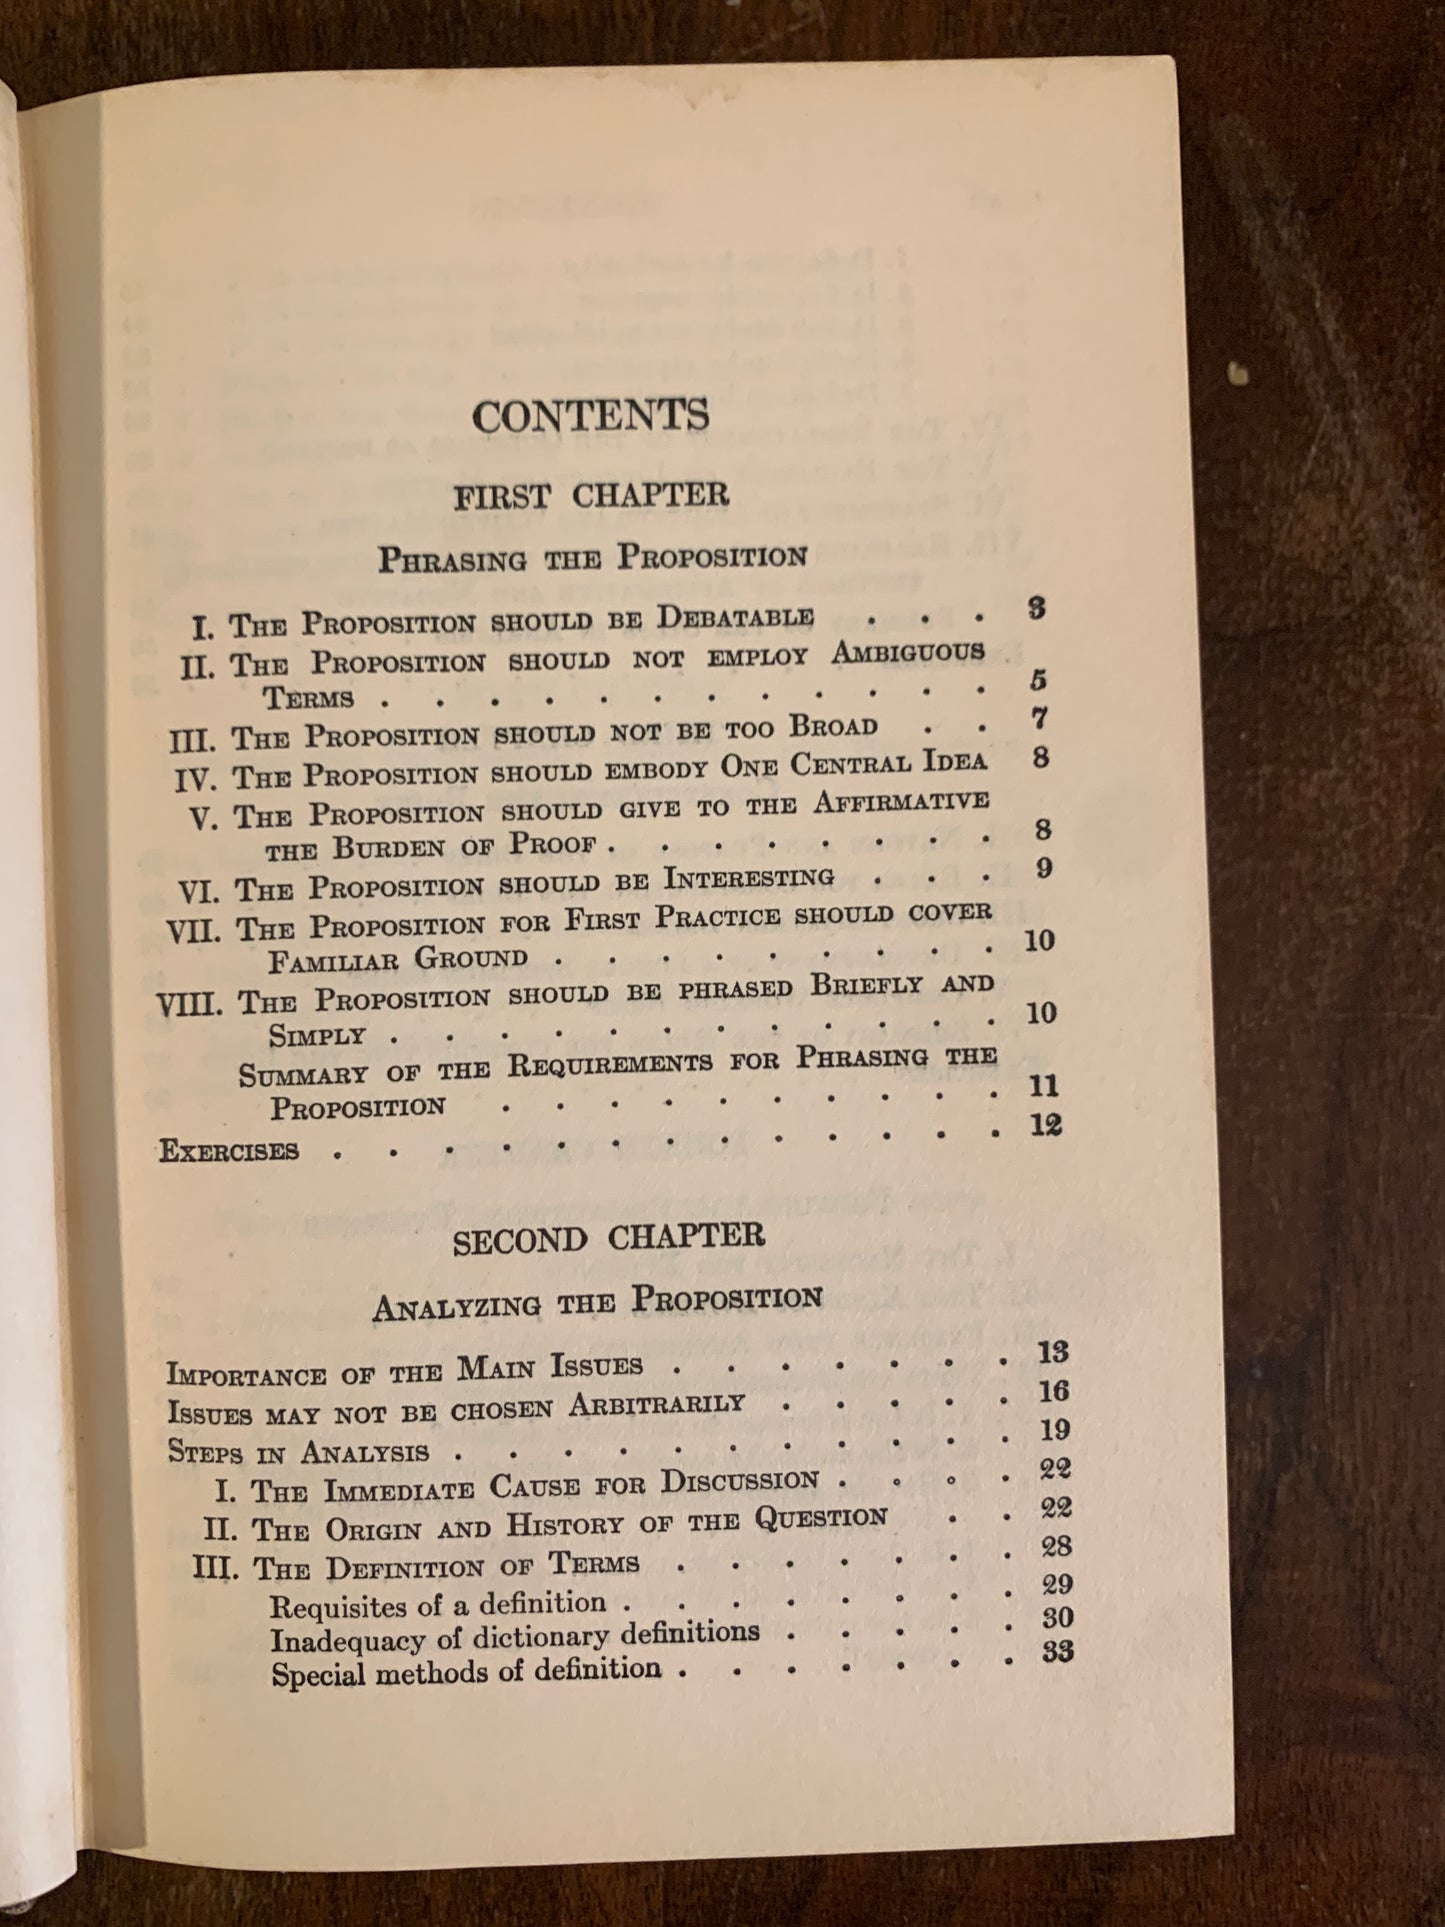 Argumentation and Debate, William Trufant Foster, Revised Edition, 1917